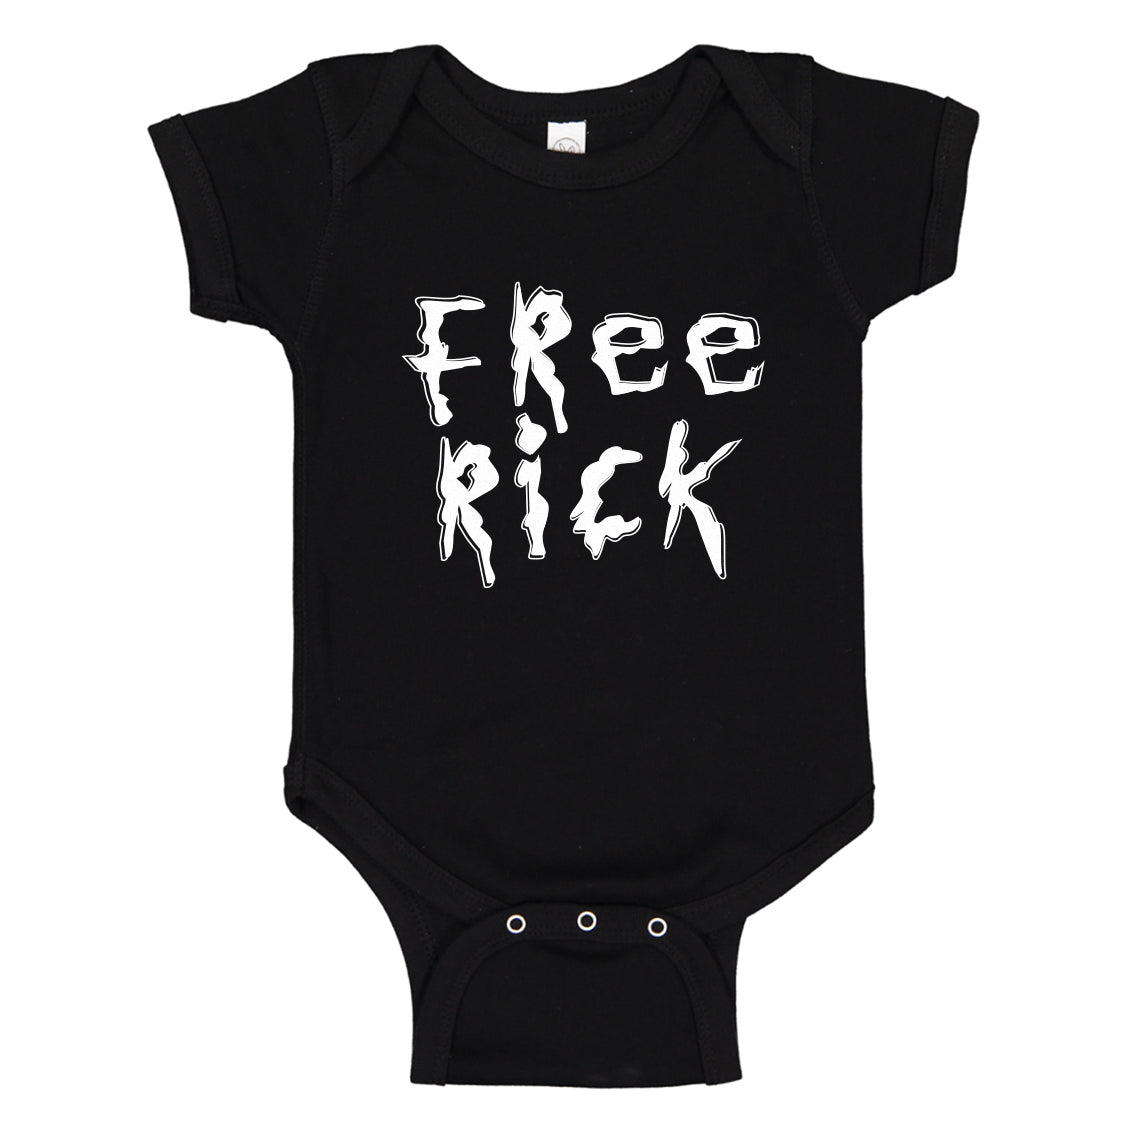 Baby Onesie Free Rick 100% Cotton Infant Bodysuit